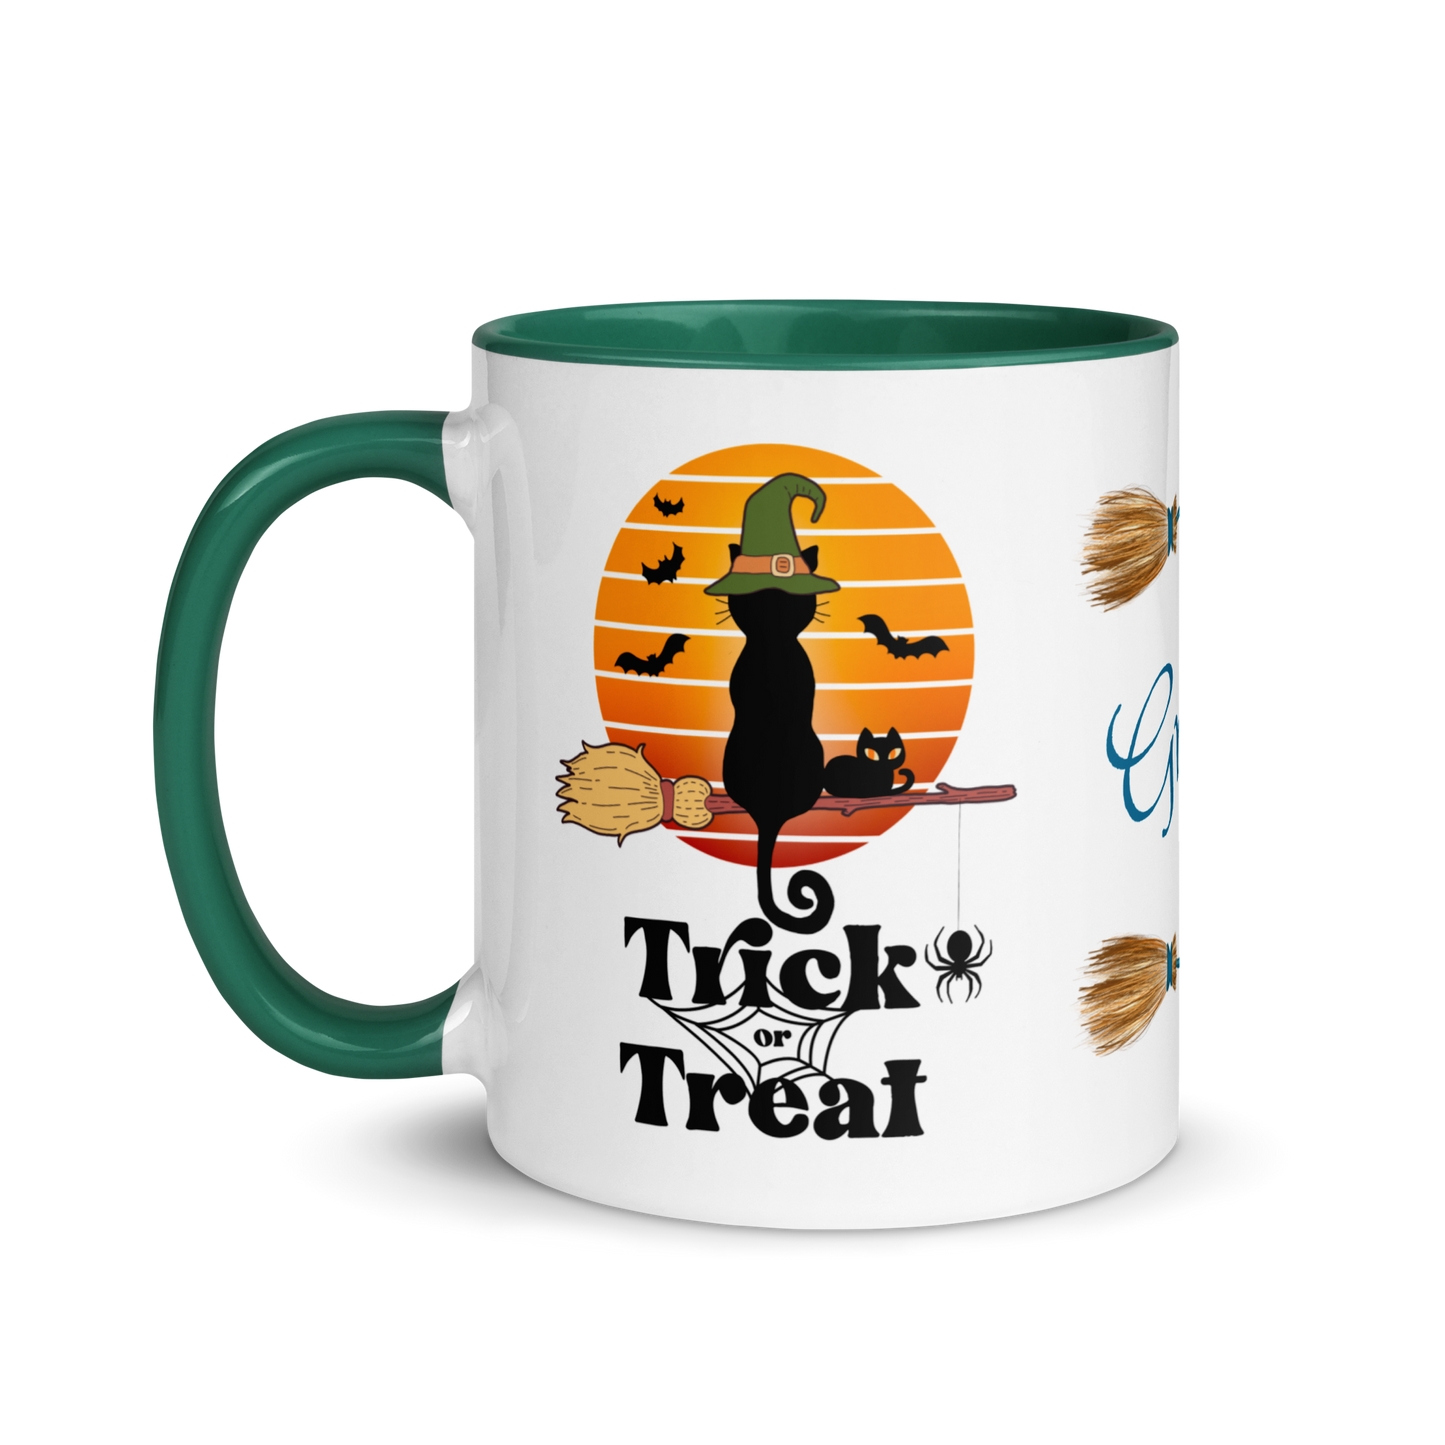 Add Your Name Coffee Mug 11oz | Trick or Treat Black Cat Broom Border